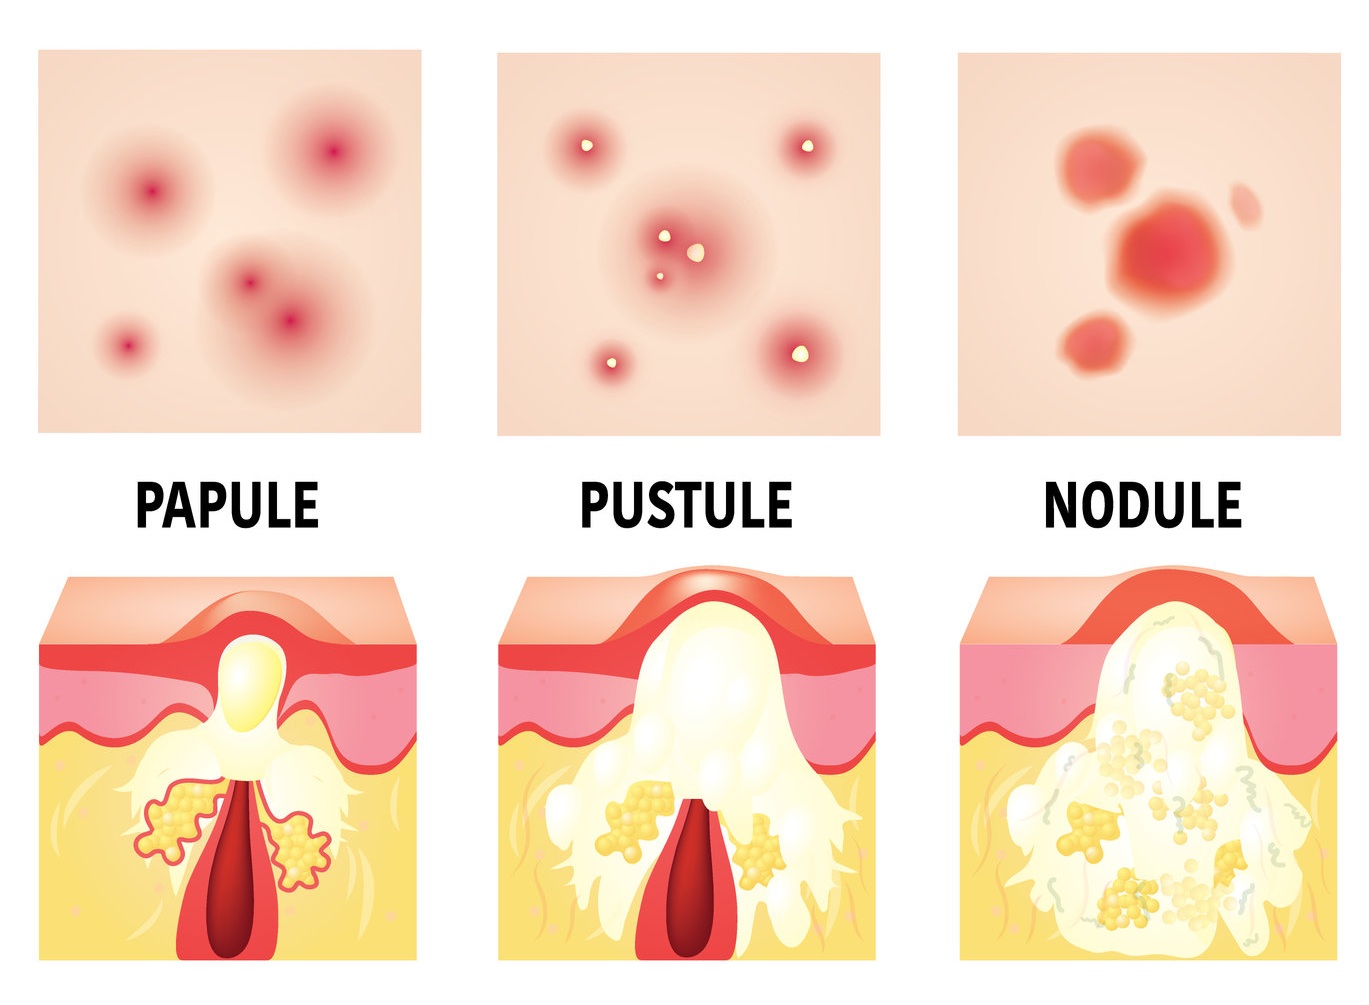 acne nodule vs cyst